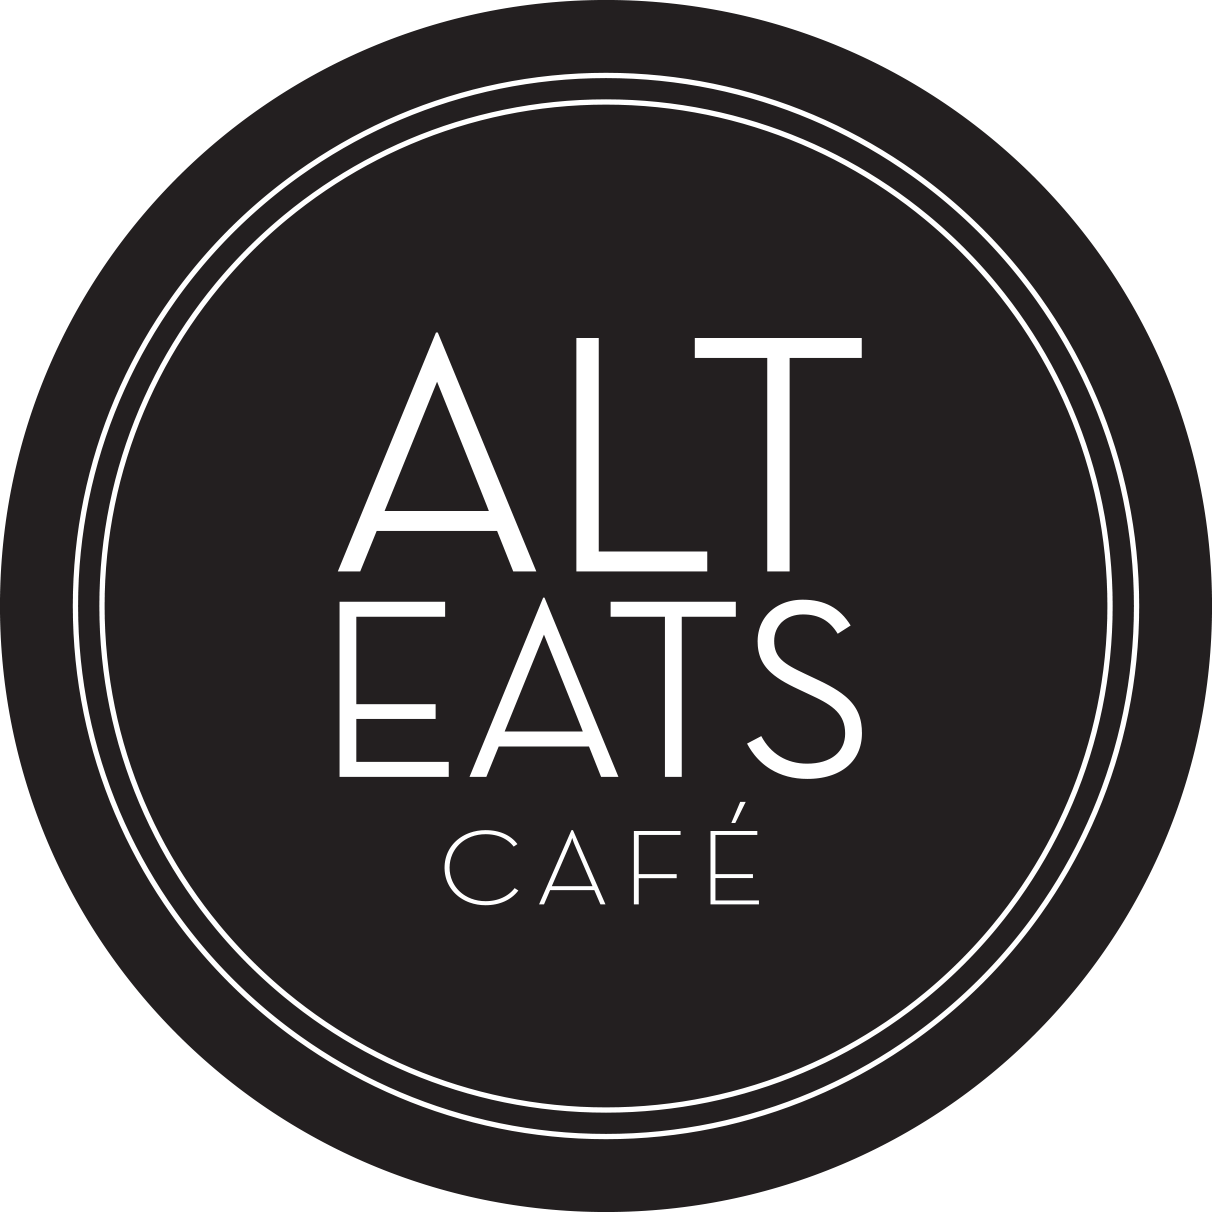 ALT EATS CAFE